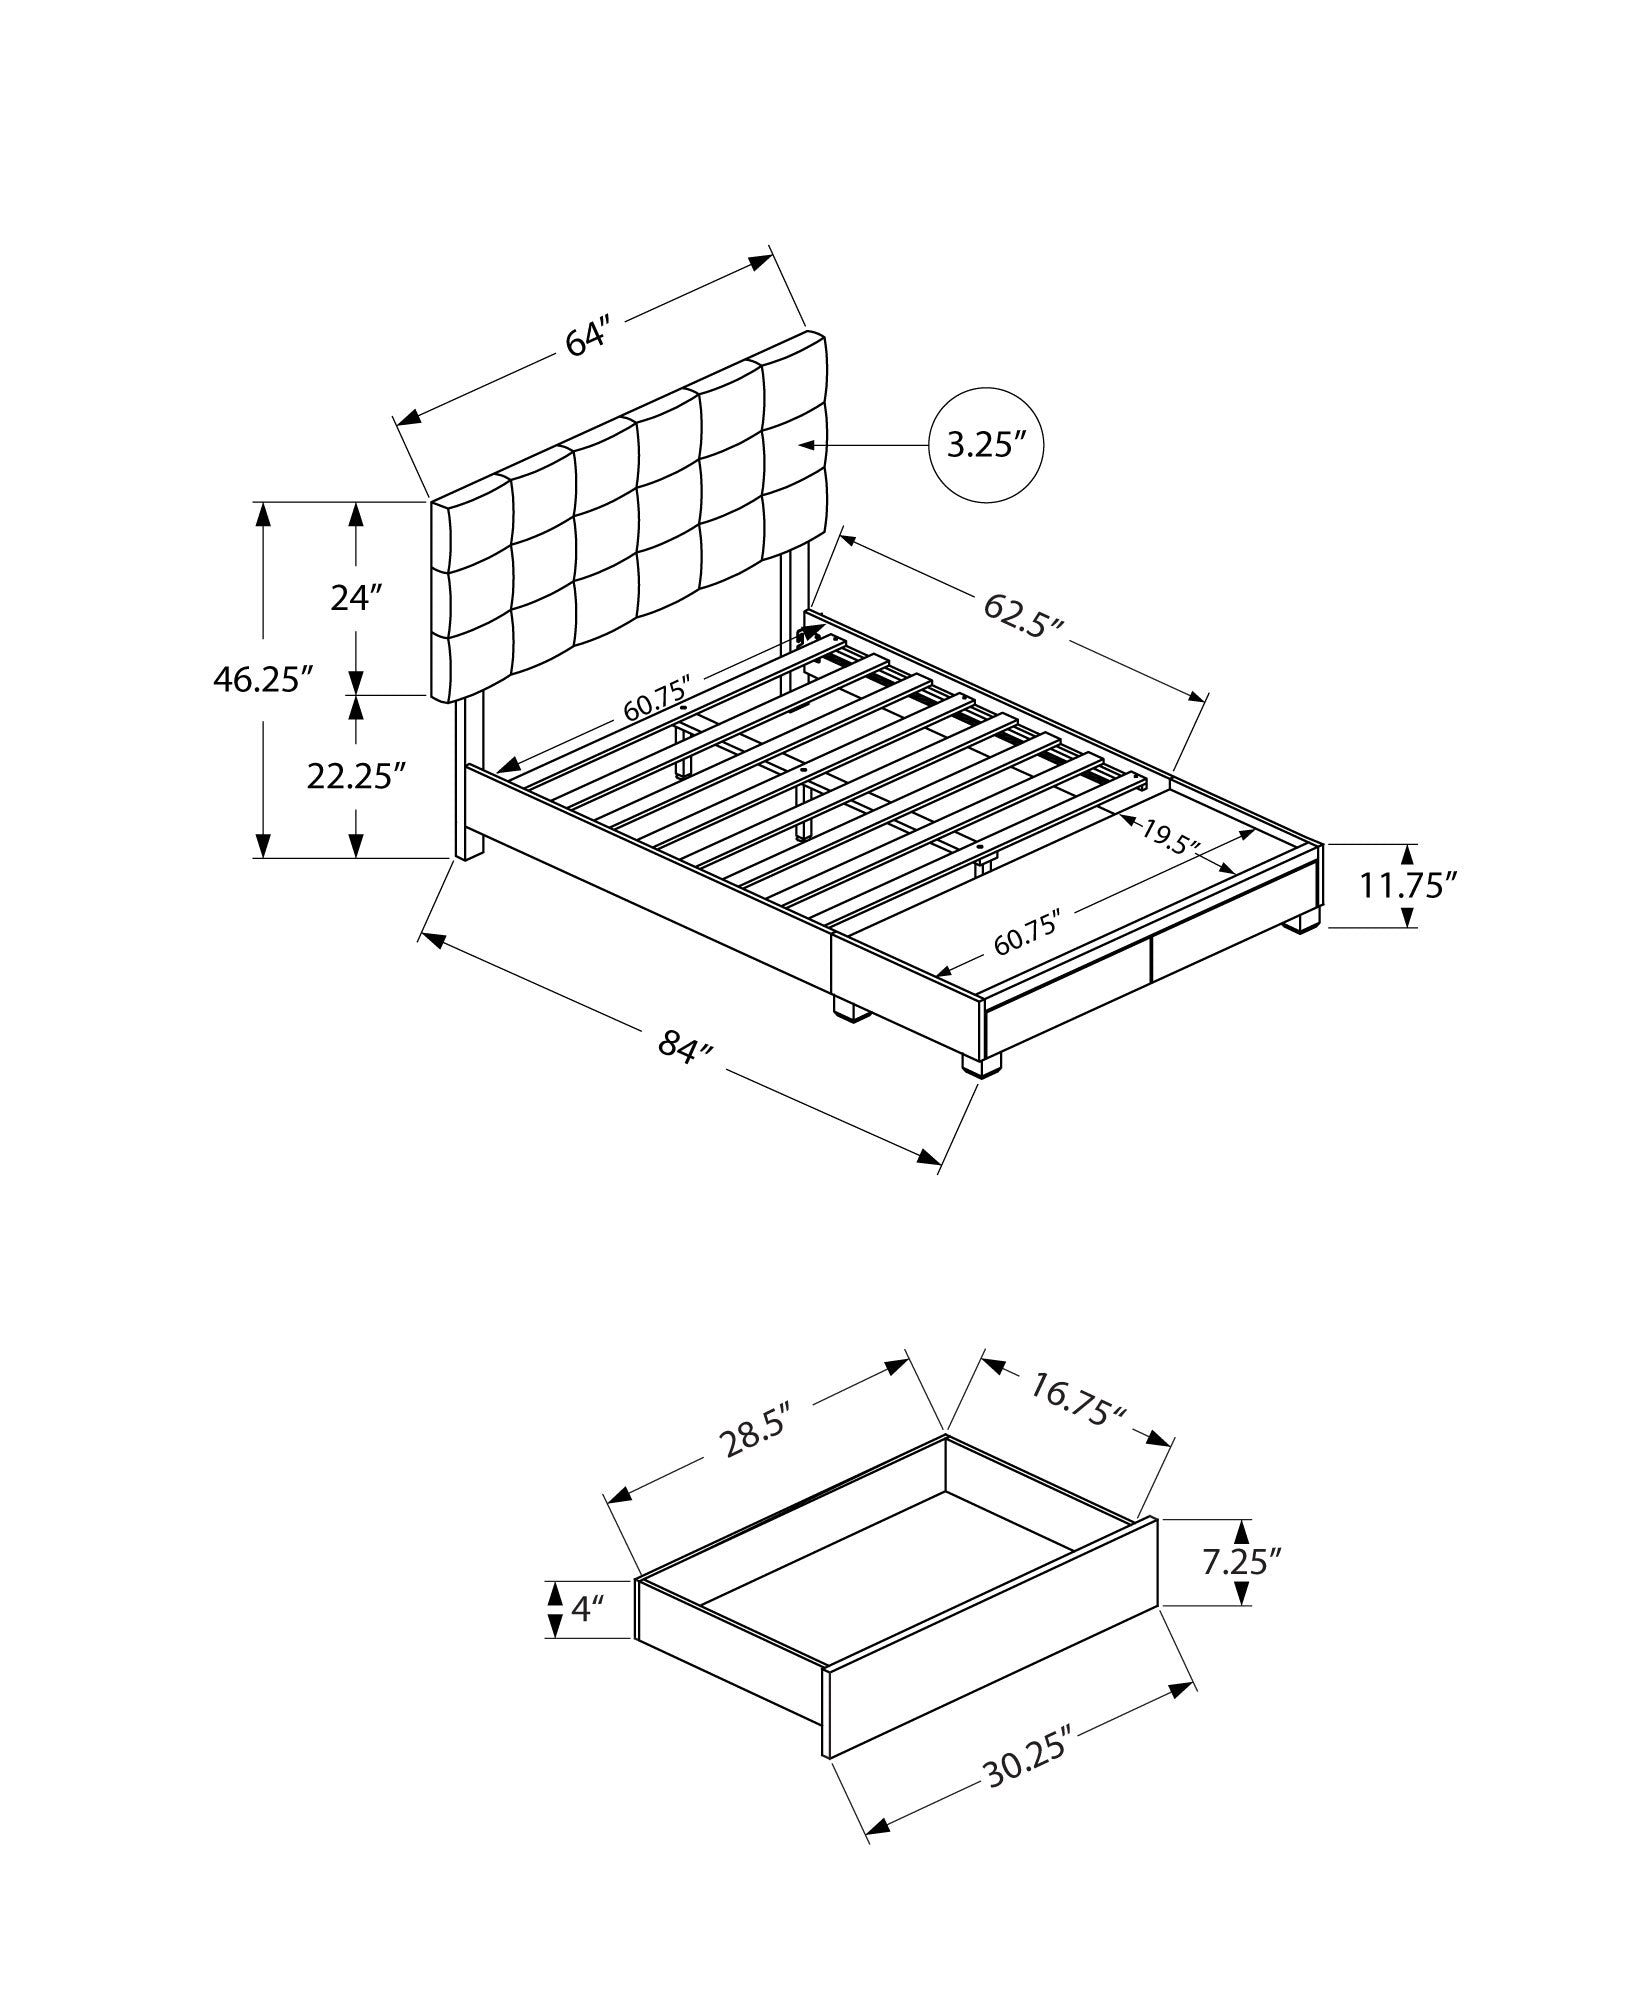 Bed - Queen Size / Dark Grey Linen With 2 Storage Drawers